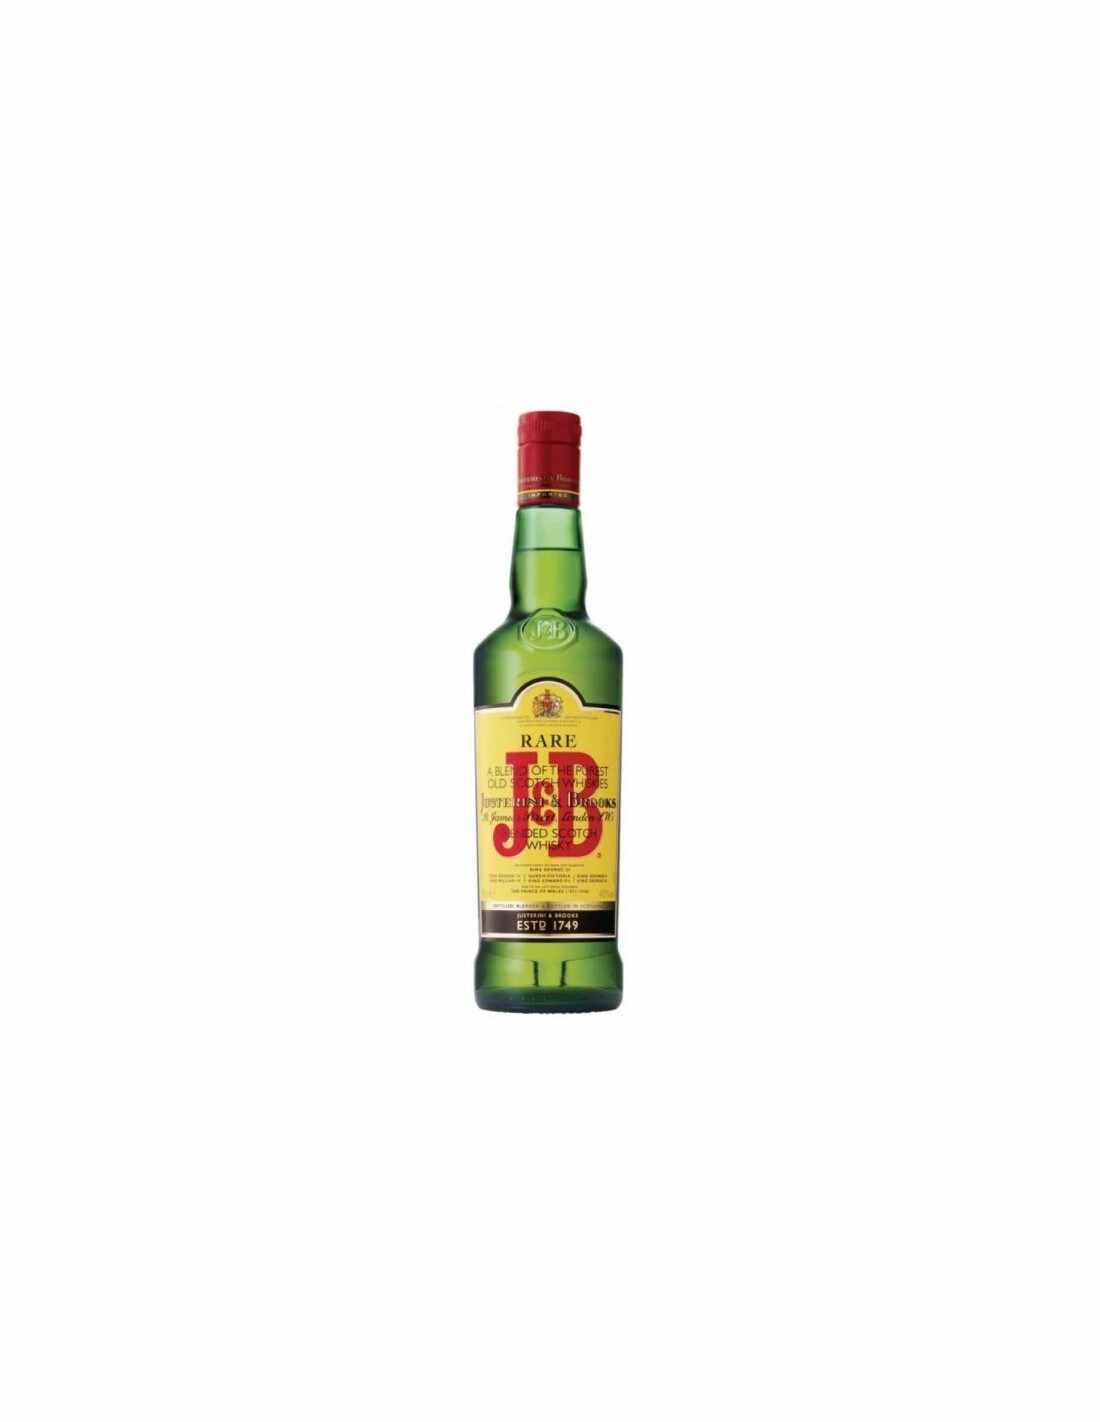 Whisky J&B Rare, 0.7L, 40% alc., Scotia